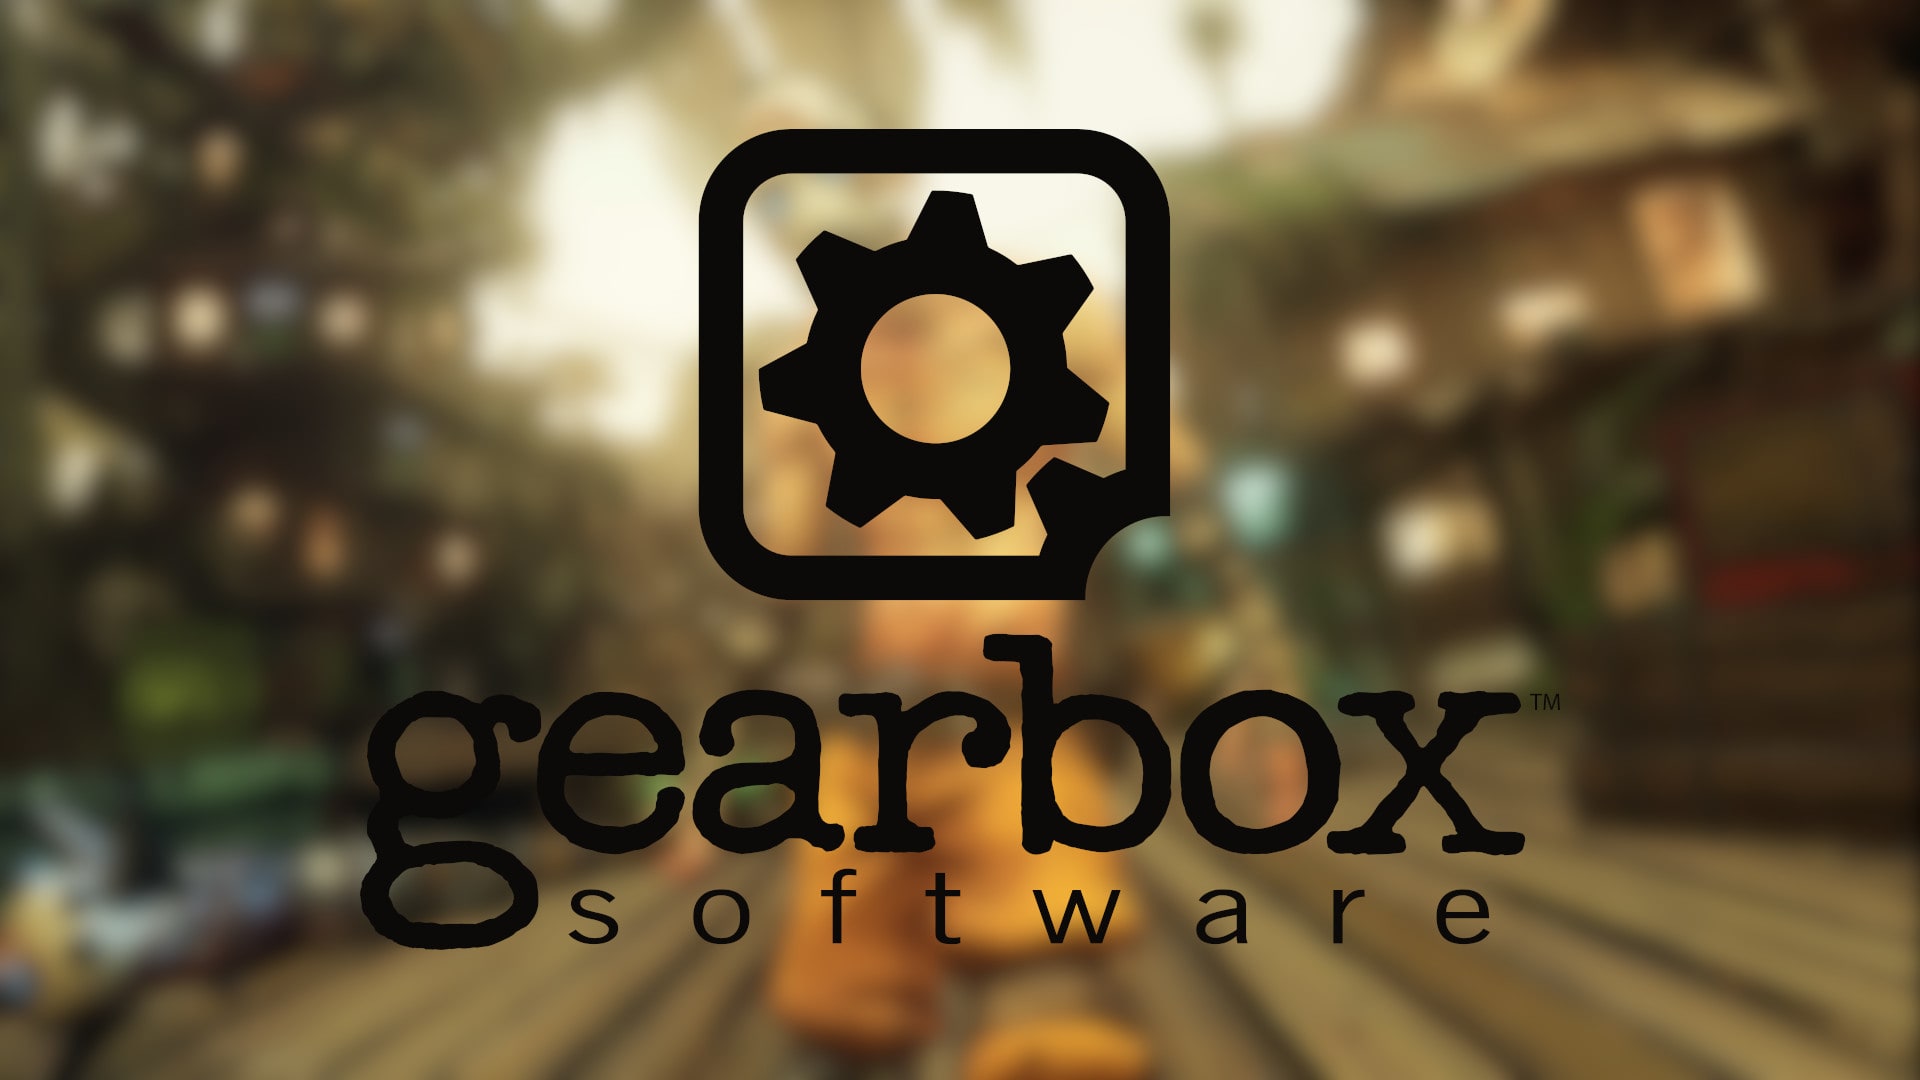 Gearbox Software logo on top of Borderlands screenshot.